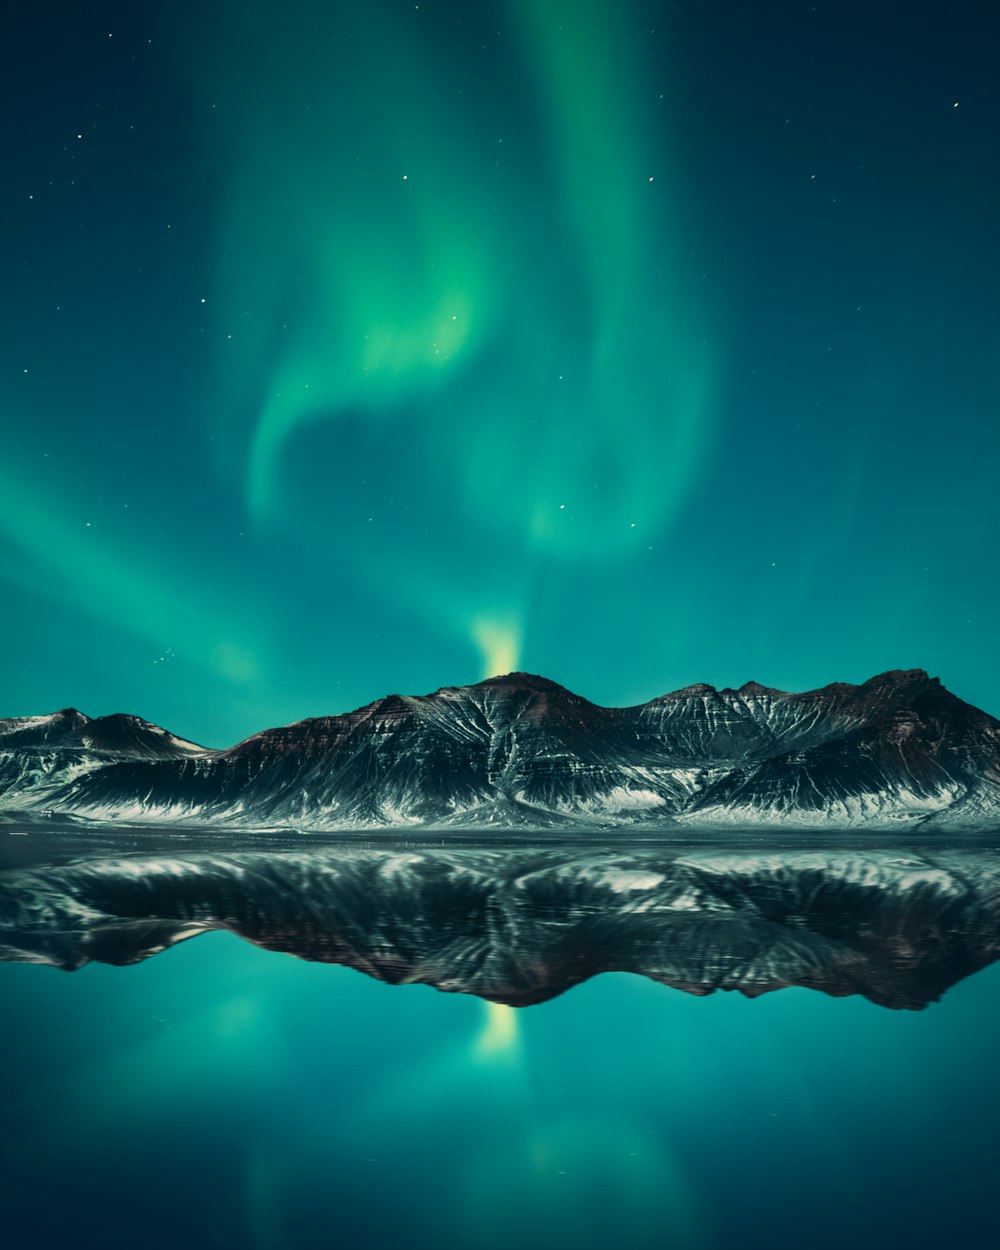 Best 500+ Northern Lights Wallpapers | Download Free Images On Unsplash